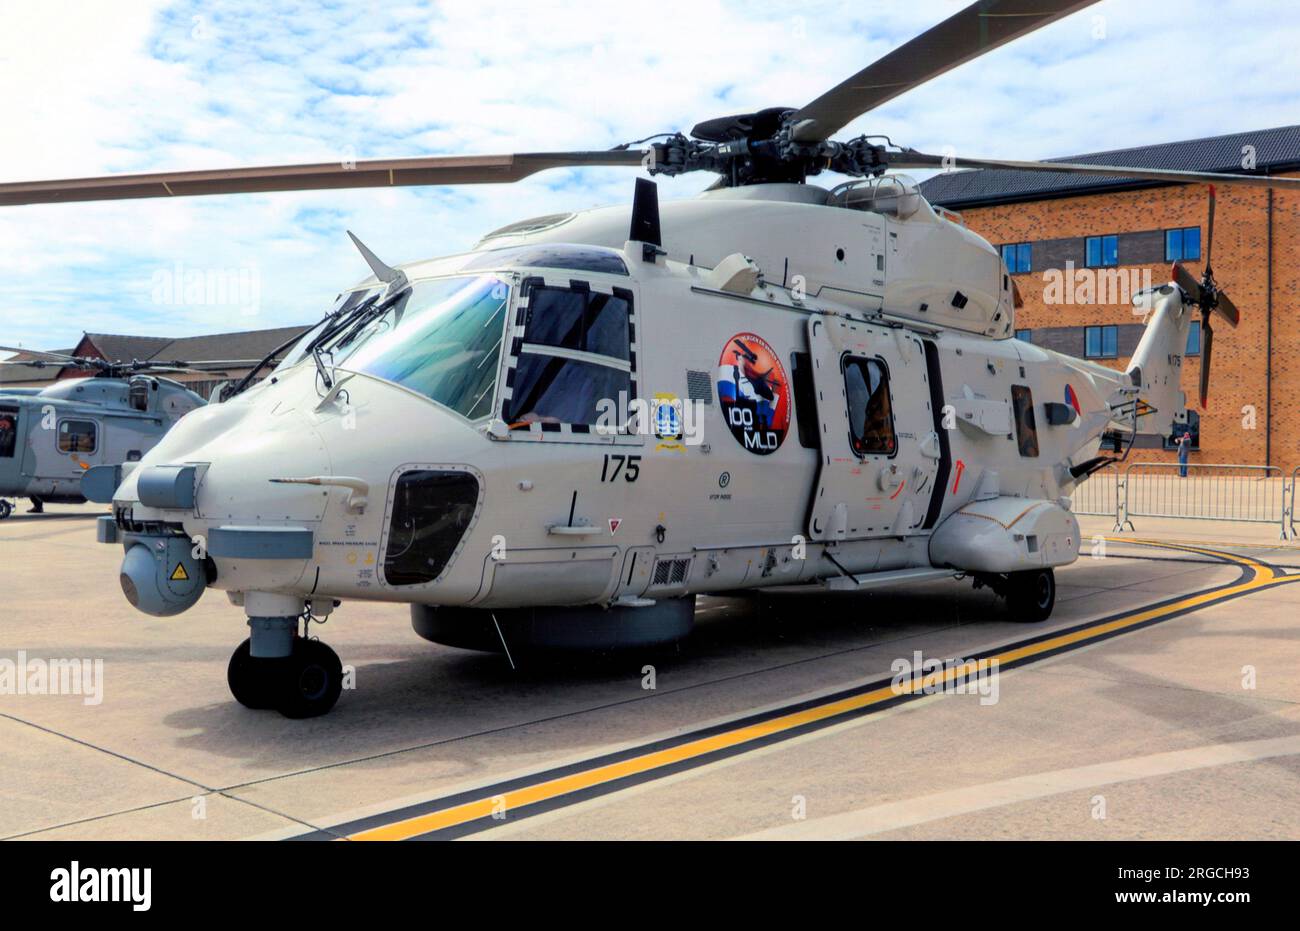 Koninklijke Marineluchtvaartdienst - NH Industries NH90 NFH N-175 (msn 1175), of 860 Squadron. (Koninklijke Marineluchtvaartdienst - Royal Netherlands Navy). Stock Photo